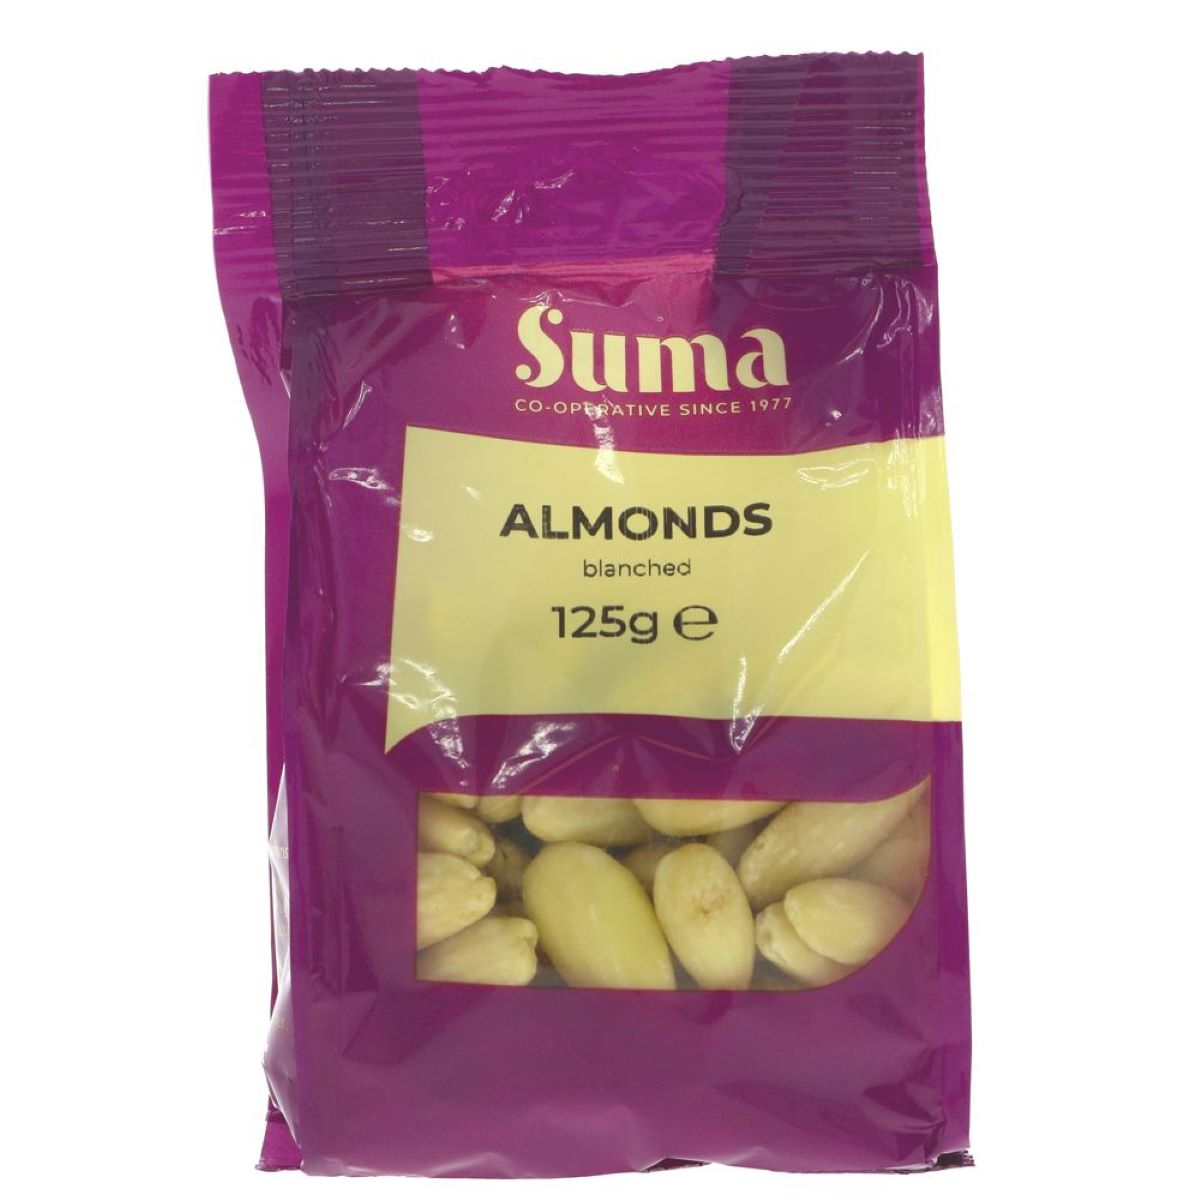 Suma Almonds -25g